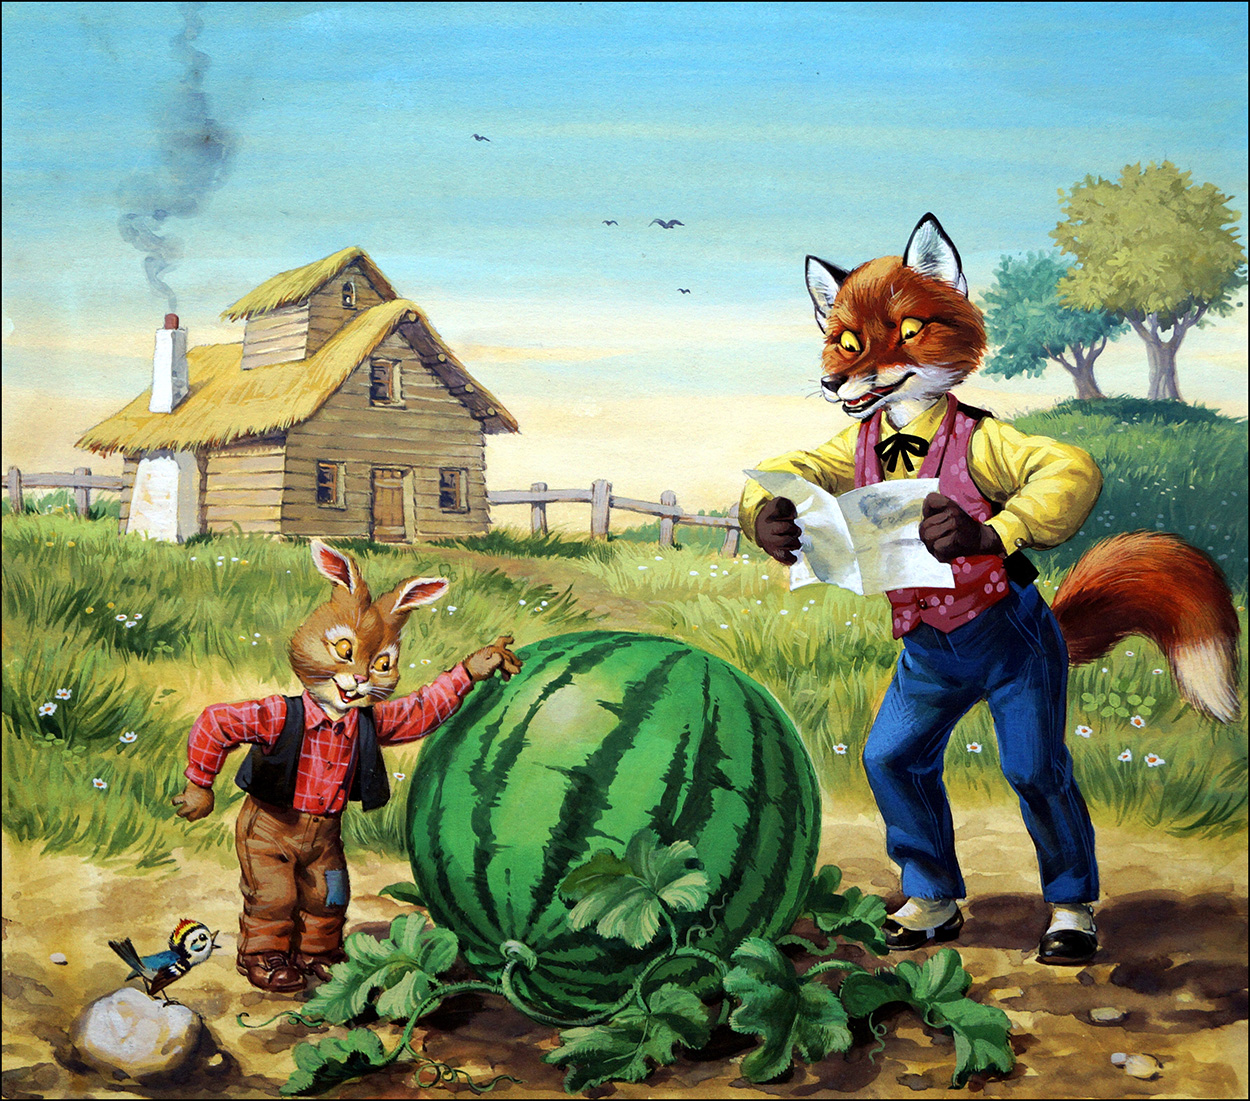 Brer Rabbit - Watermelon in Easter Hay (Original) art by Virginio Livraghi Art at The Illustration Art Gallery